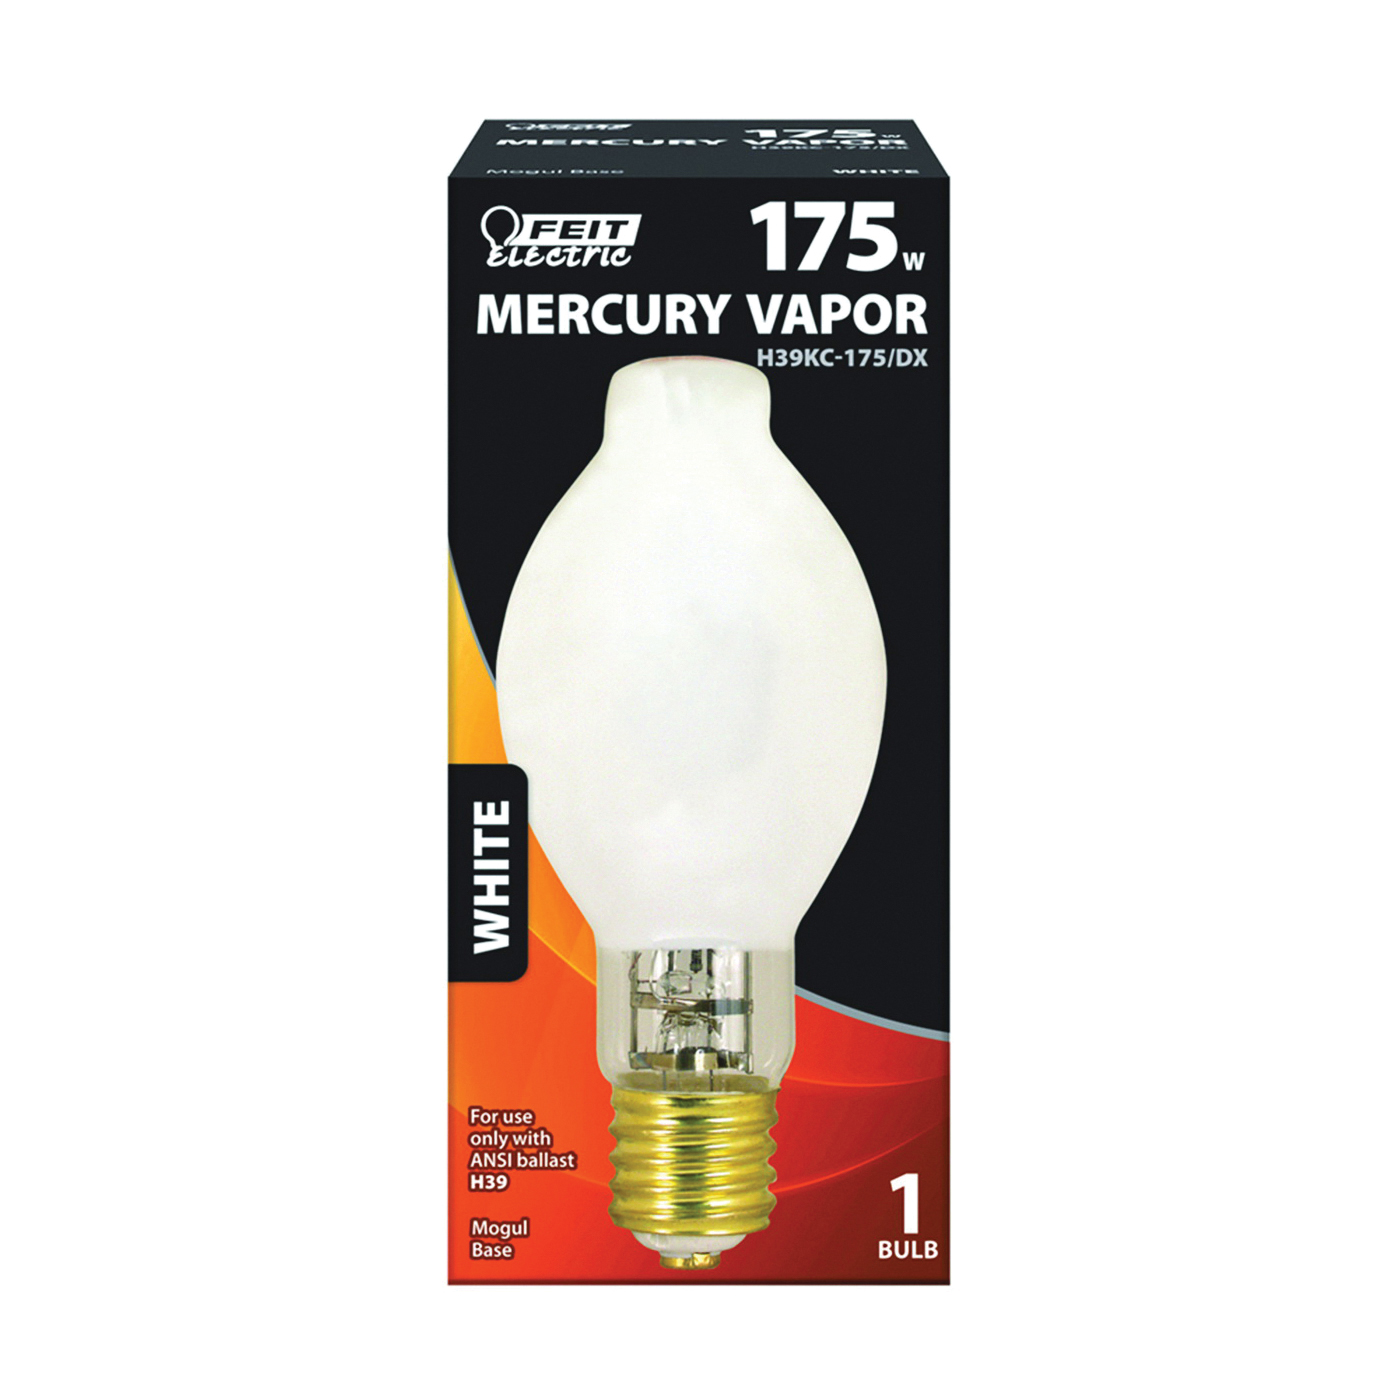 Feit Electric H39KC-175/DX Mercury Vapor Bulb, 175 W, BT28 Blown Tubular Lamp, Mogul E39 Lamp Base, 7350 Lumens - 1